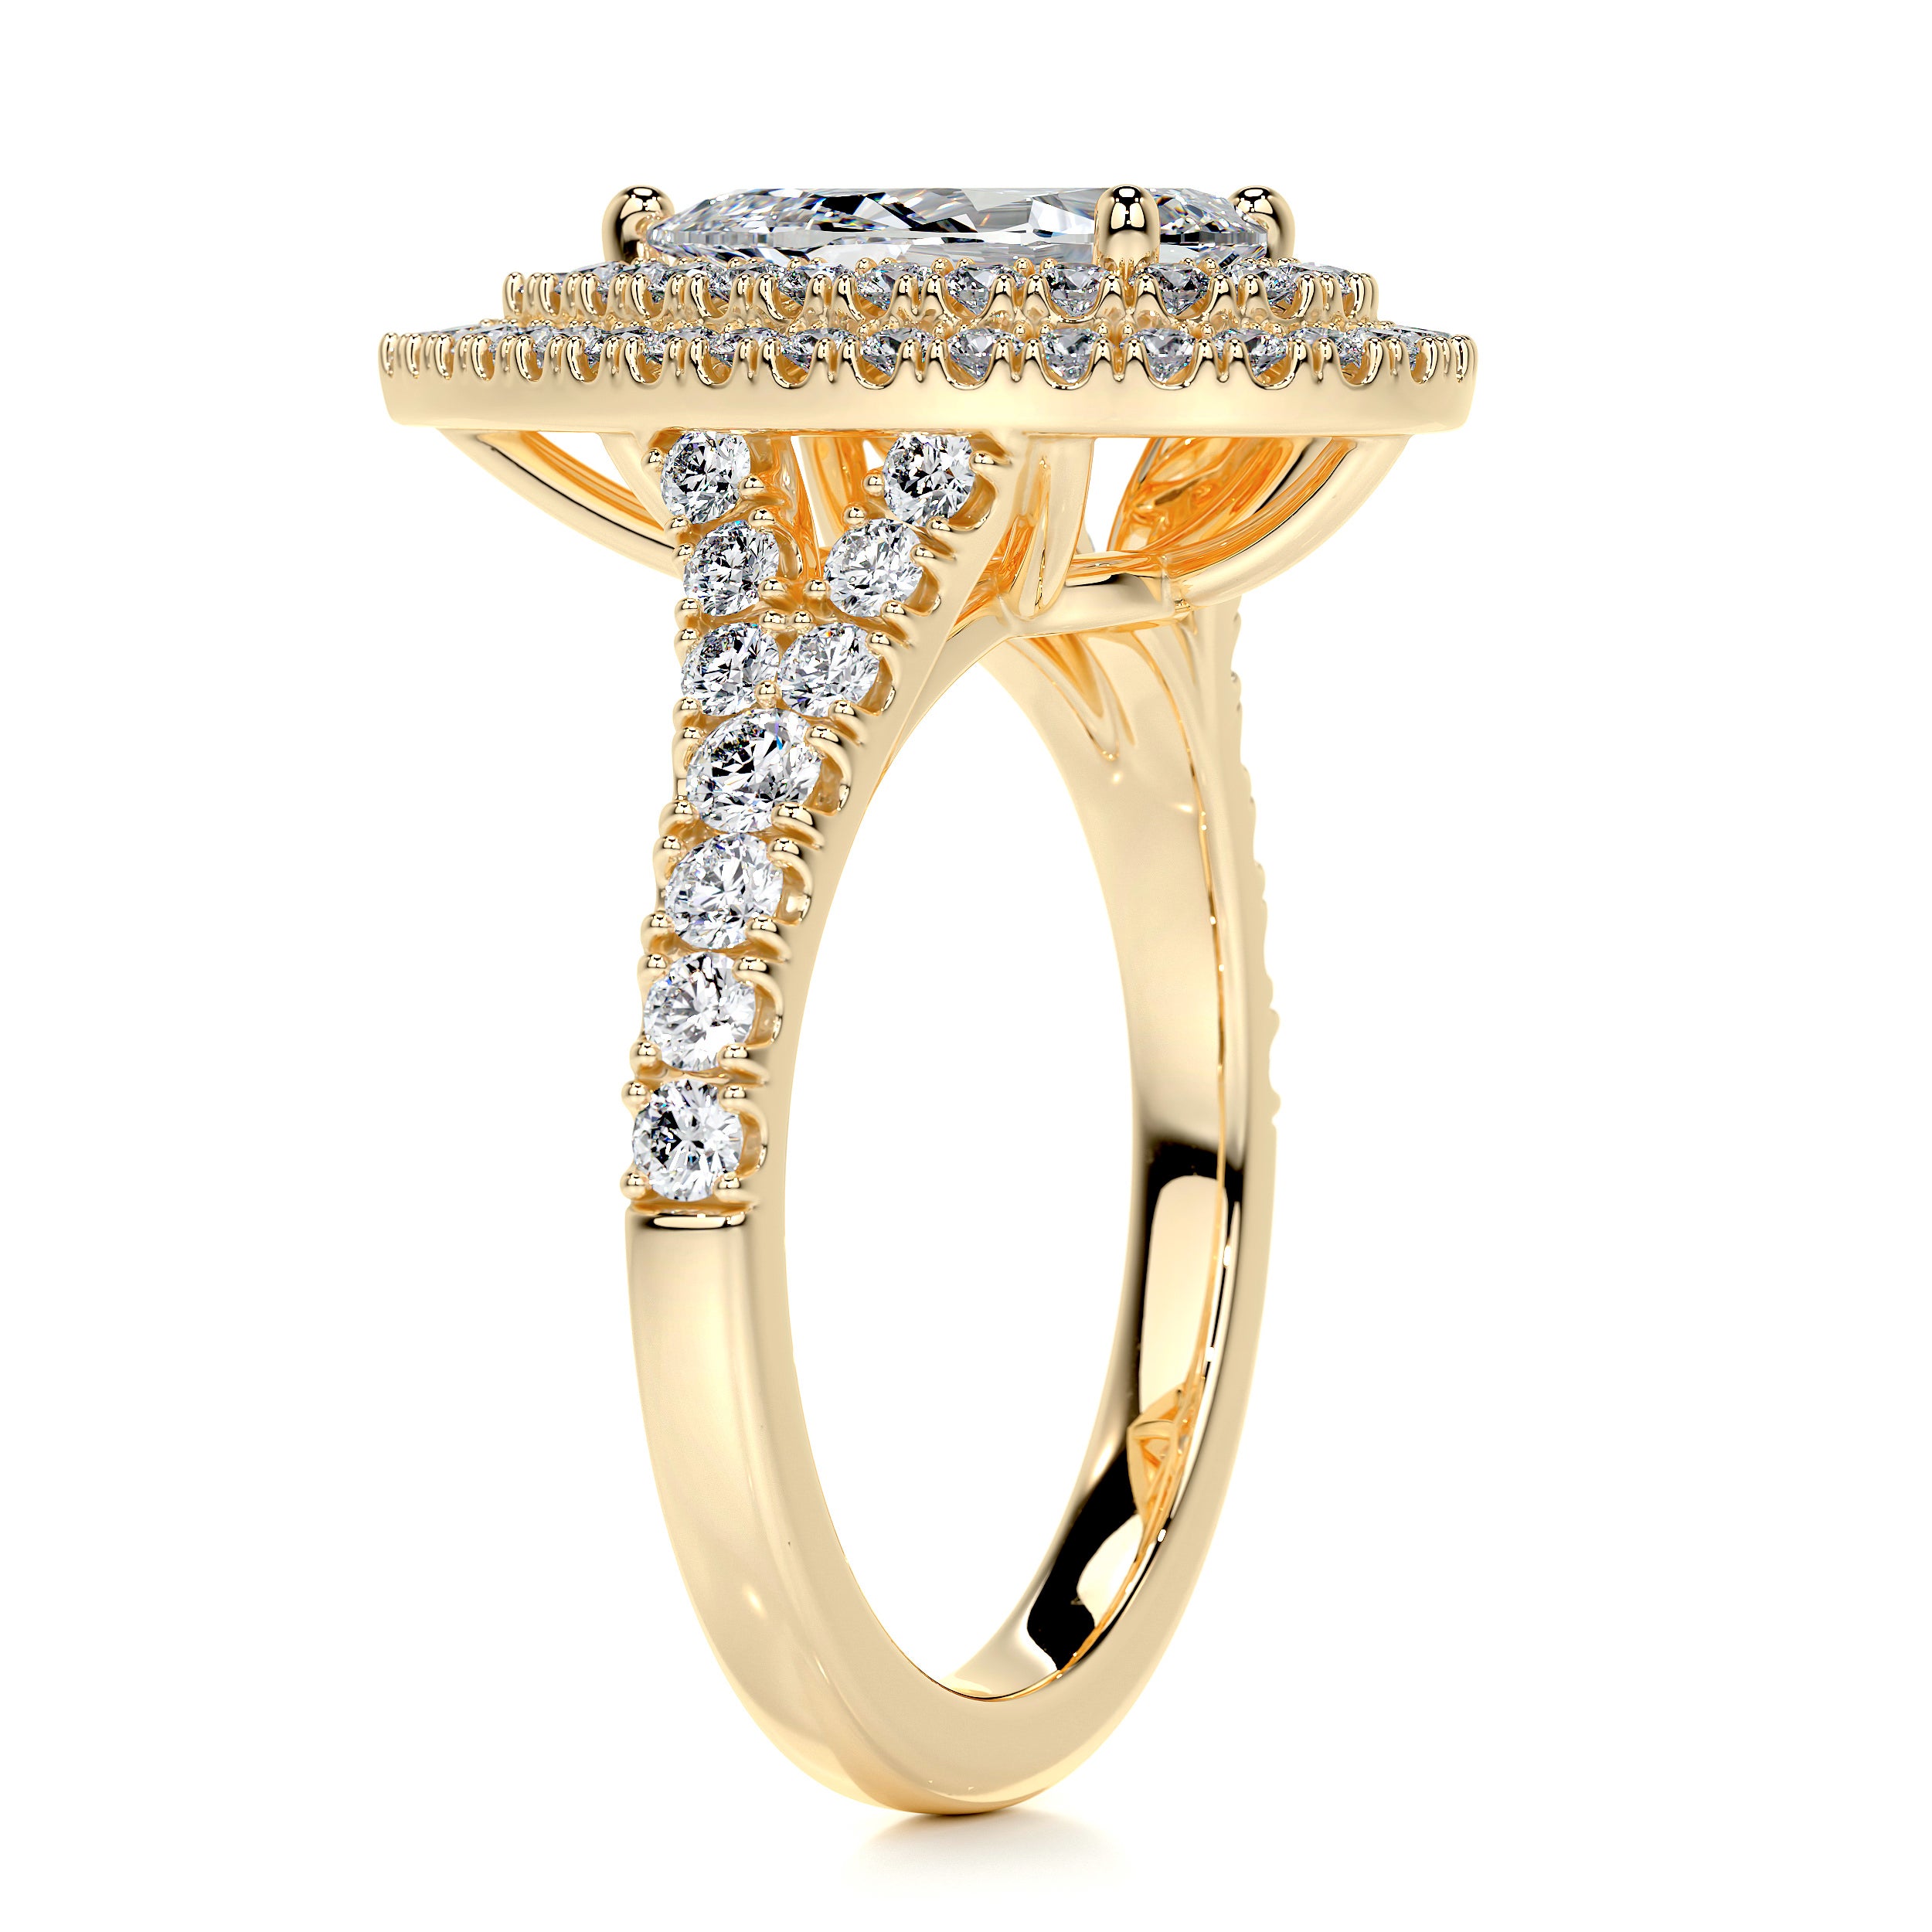 Melanie Diamond Engagement Ring   (1.75 Carat) -18K Yellow Gold